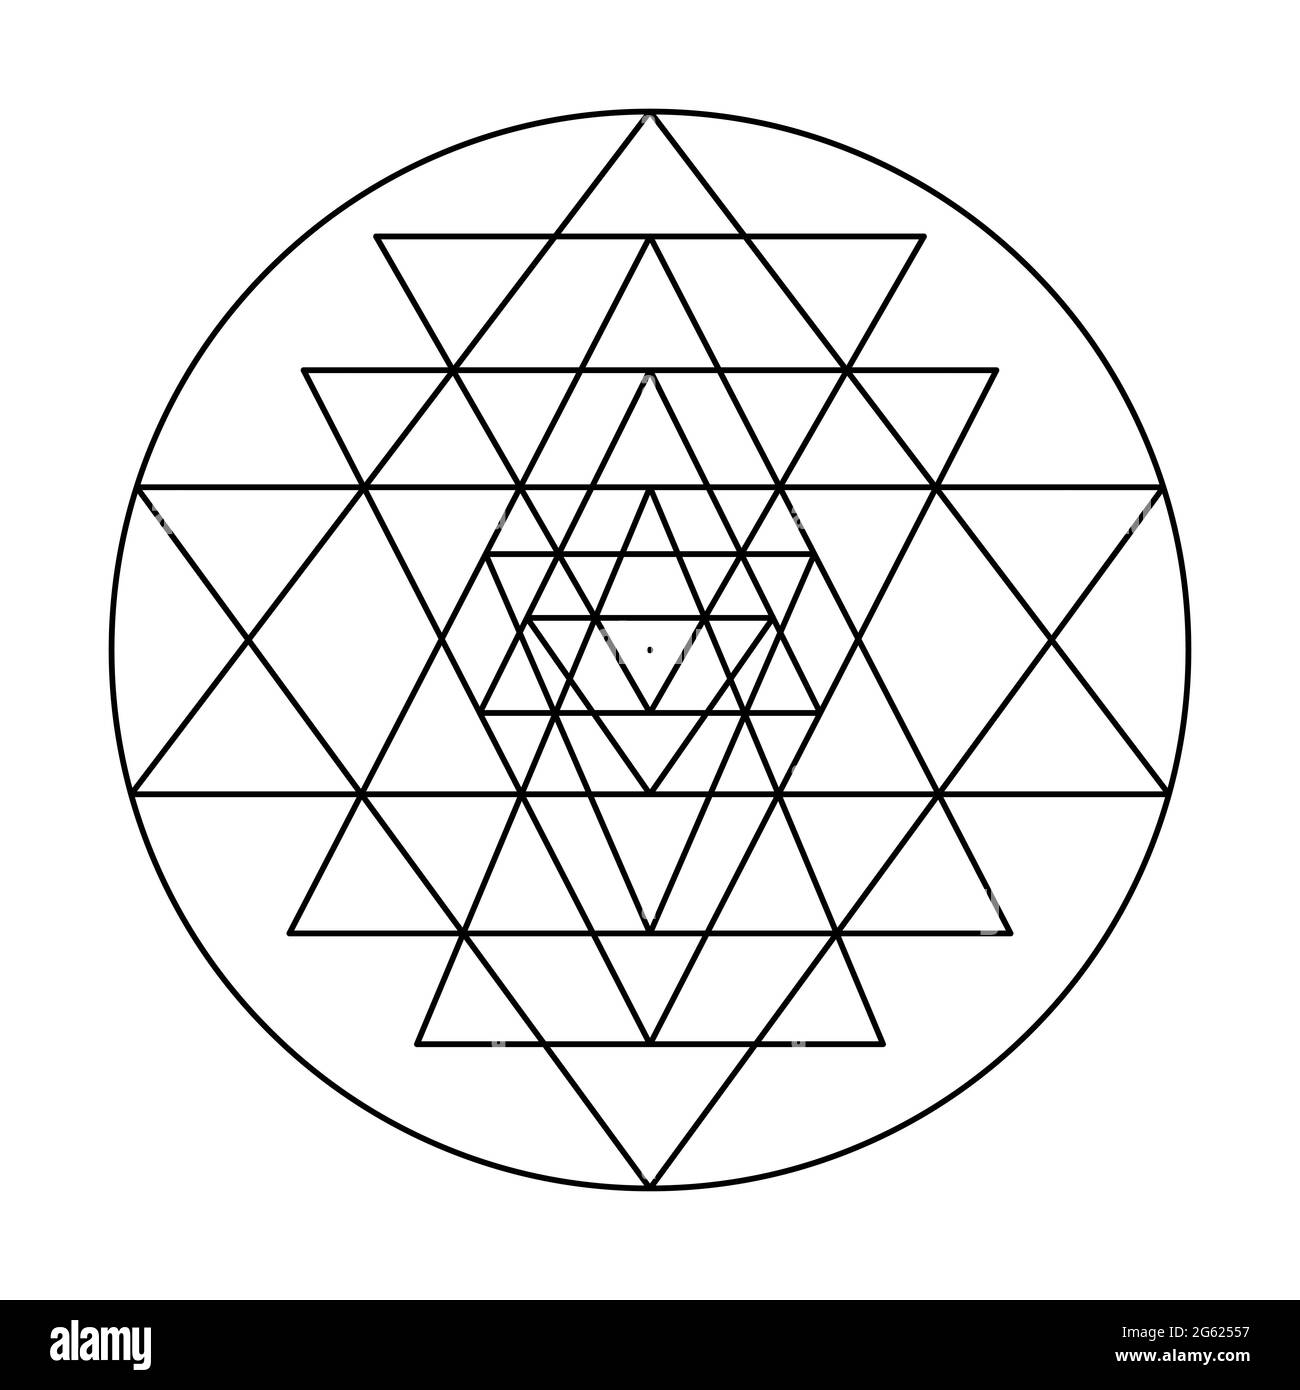 https://c8.alamy.com/comp/2G62557/nine-interlocking-triangles-of-sri-yantra-that-surround-a-central-point-known-as-bindu-the-cosmic-center-shri-yantra-or-shri-chakra-2G62557.jpg